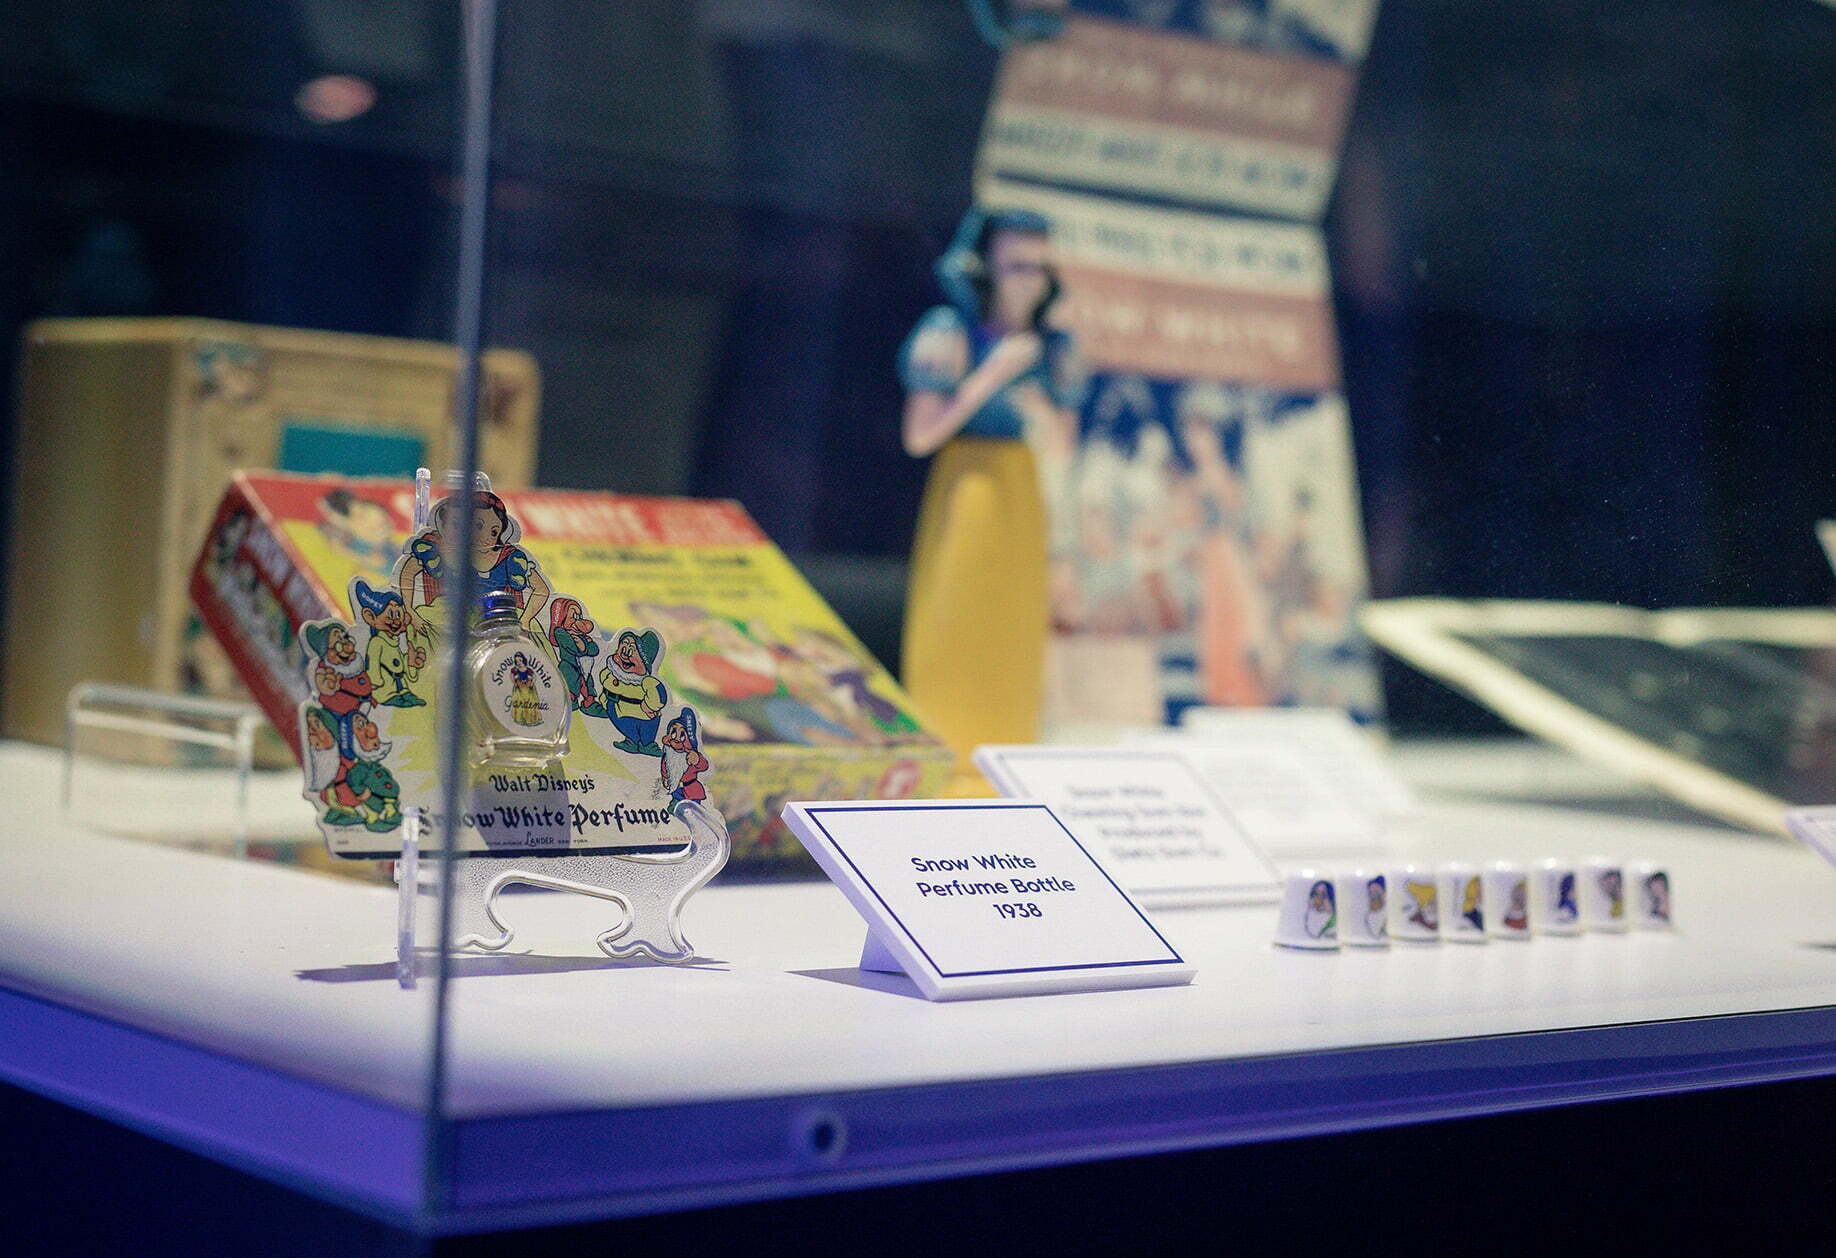 Snow White - Disney100: Disney 100 Years of Wonder exhibit at D23 Expo (Photo: Julie Nguyen/SNAP TASTE)